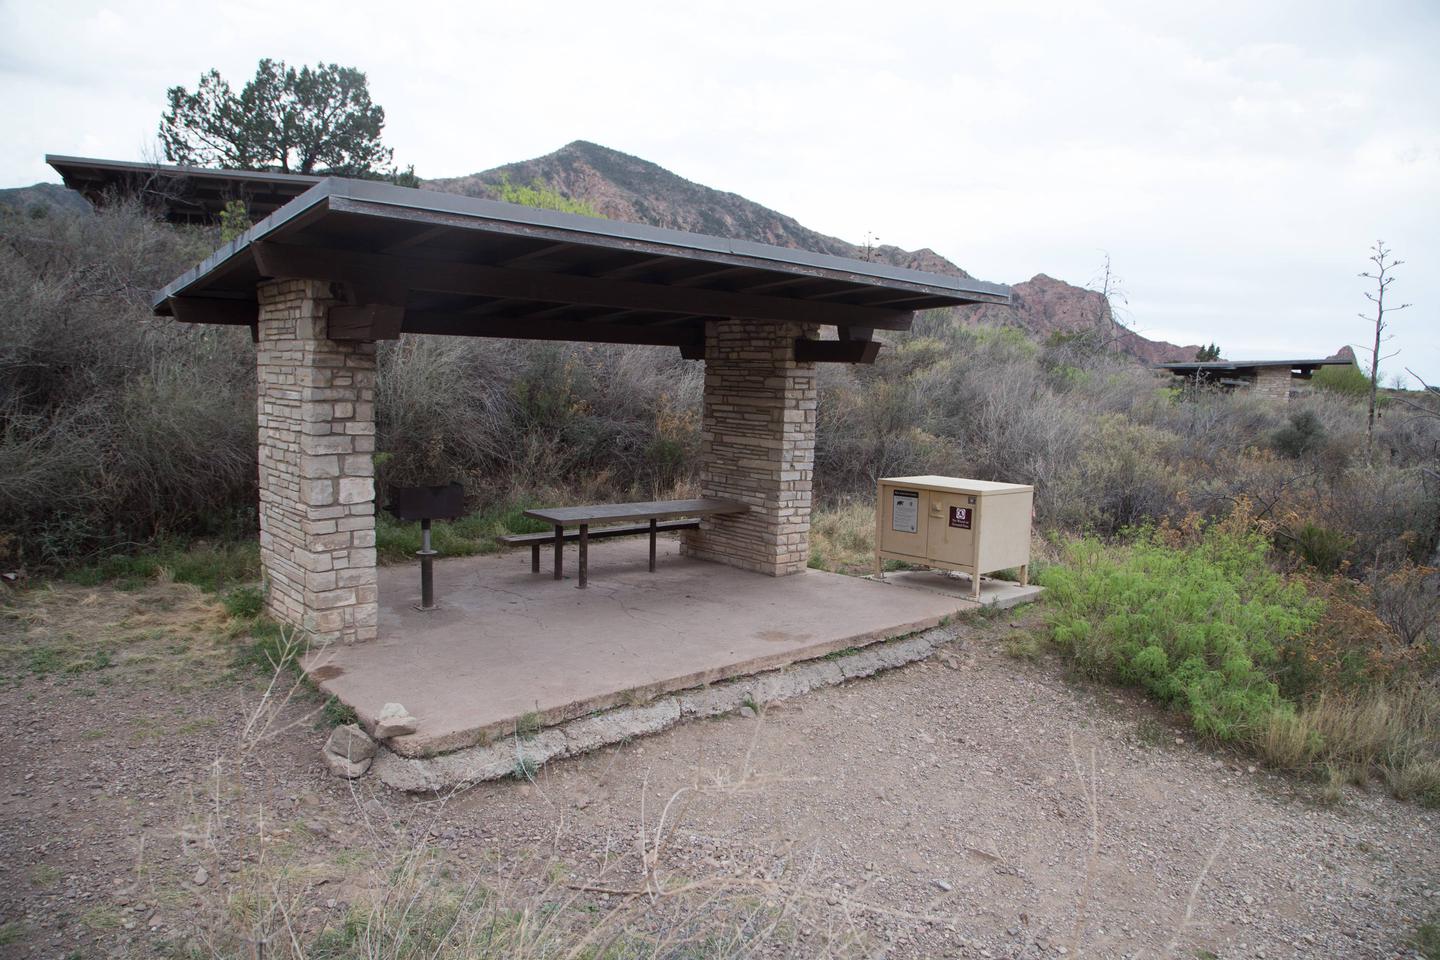 Chisos Basin Campsite #1 picnic areaPicnic area and bear box